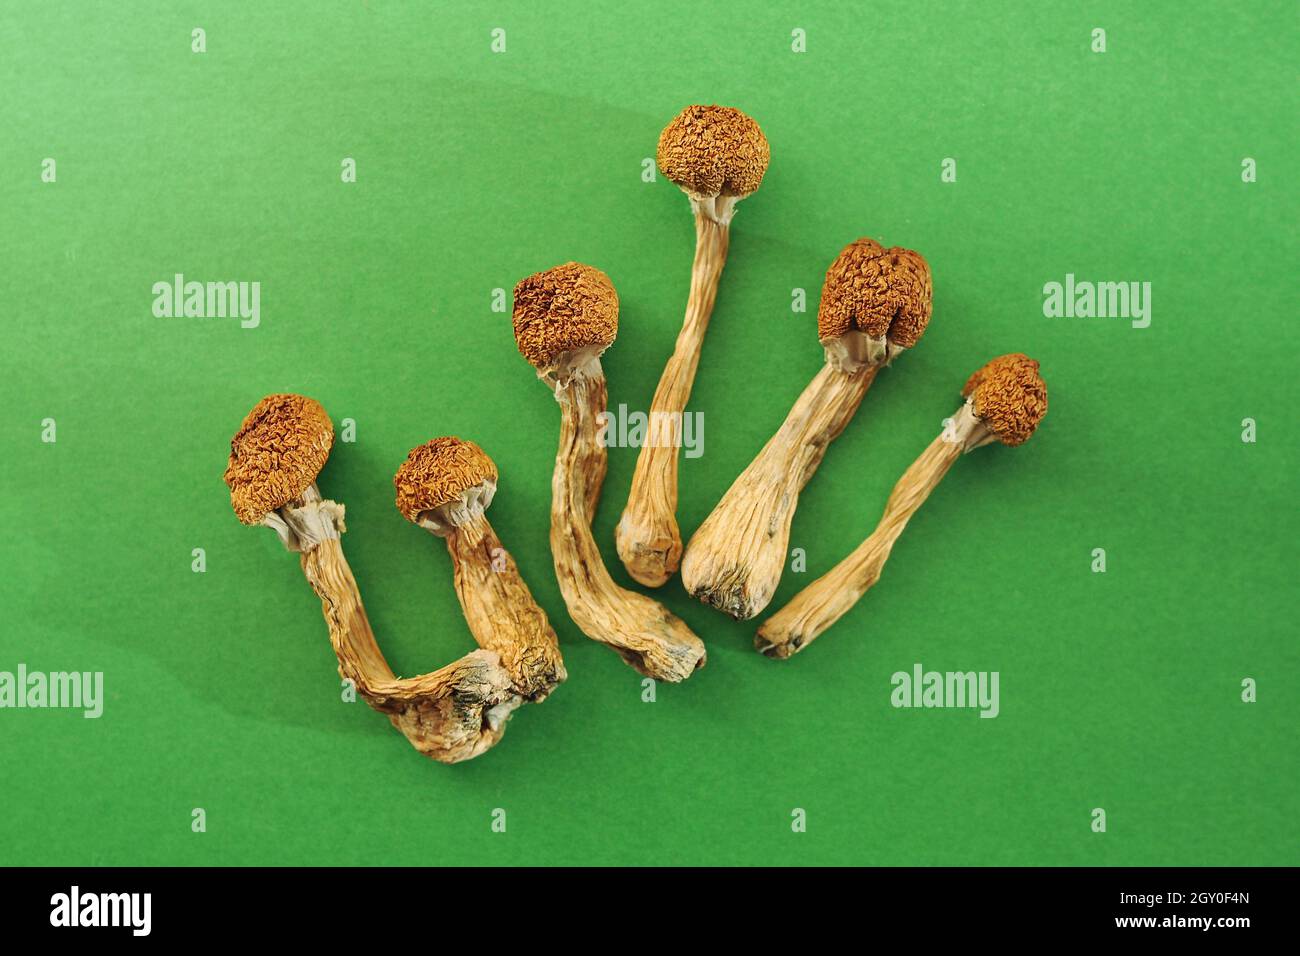 Dried psilocybin mushrooms on green background. Psychedelic magic mushroom Golden Teacher. Medical use, antidepressant. Micro-dosing concept. Stock Photo